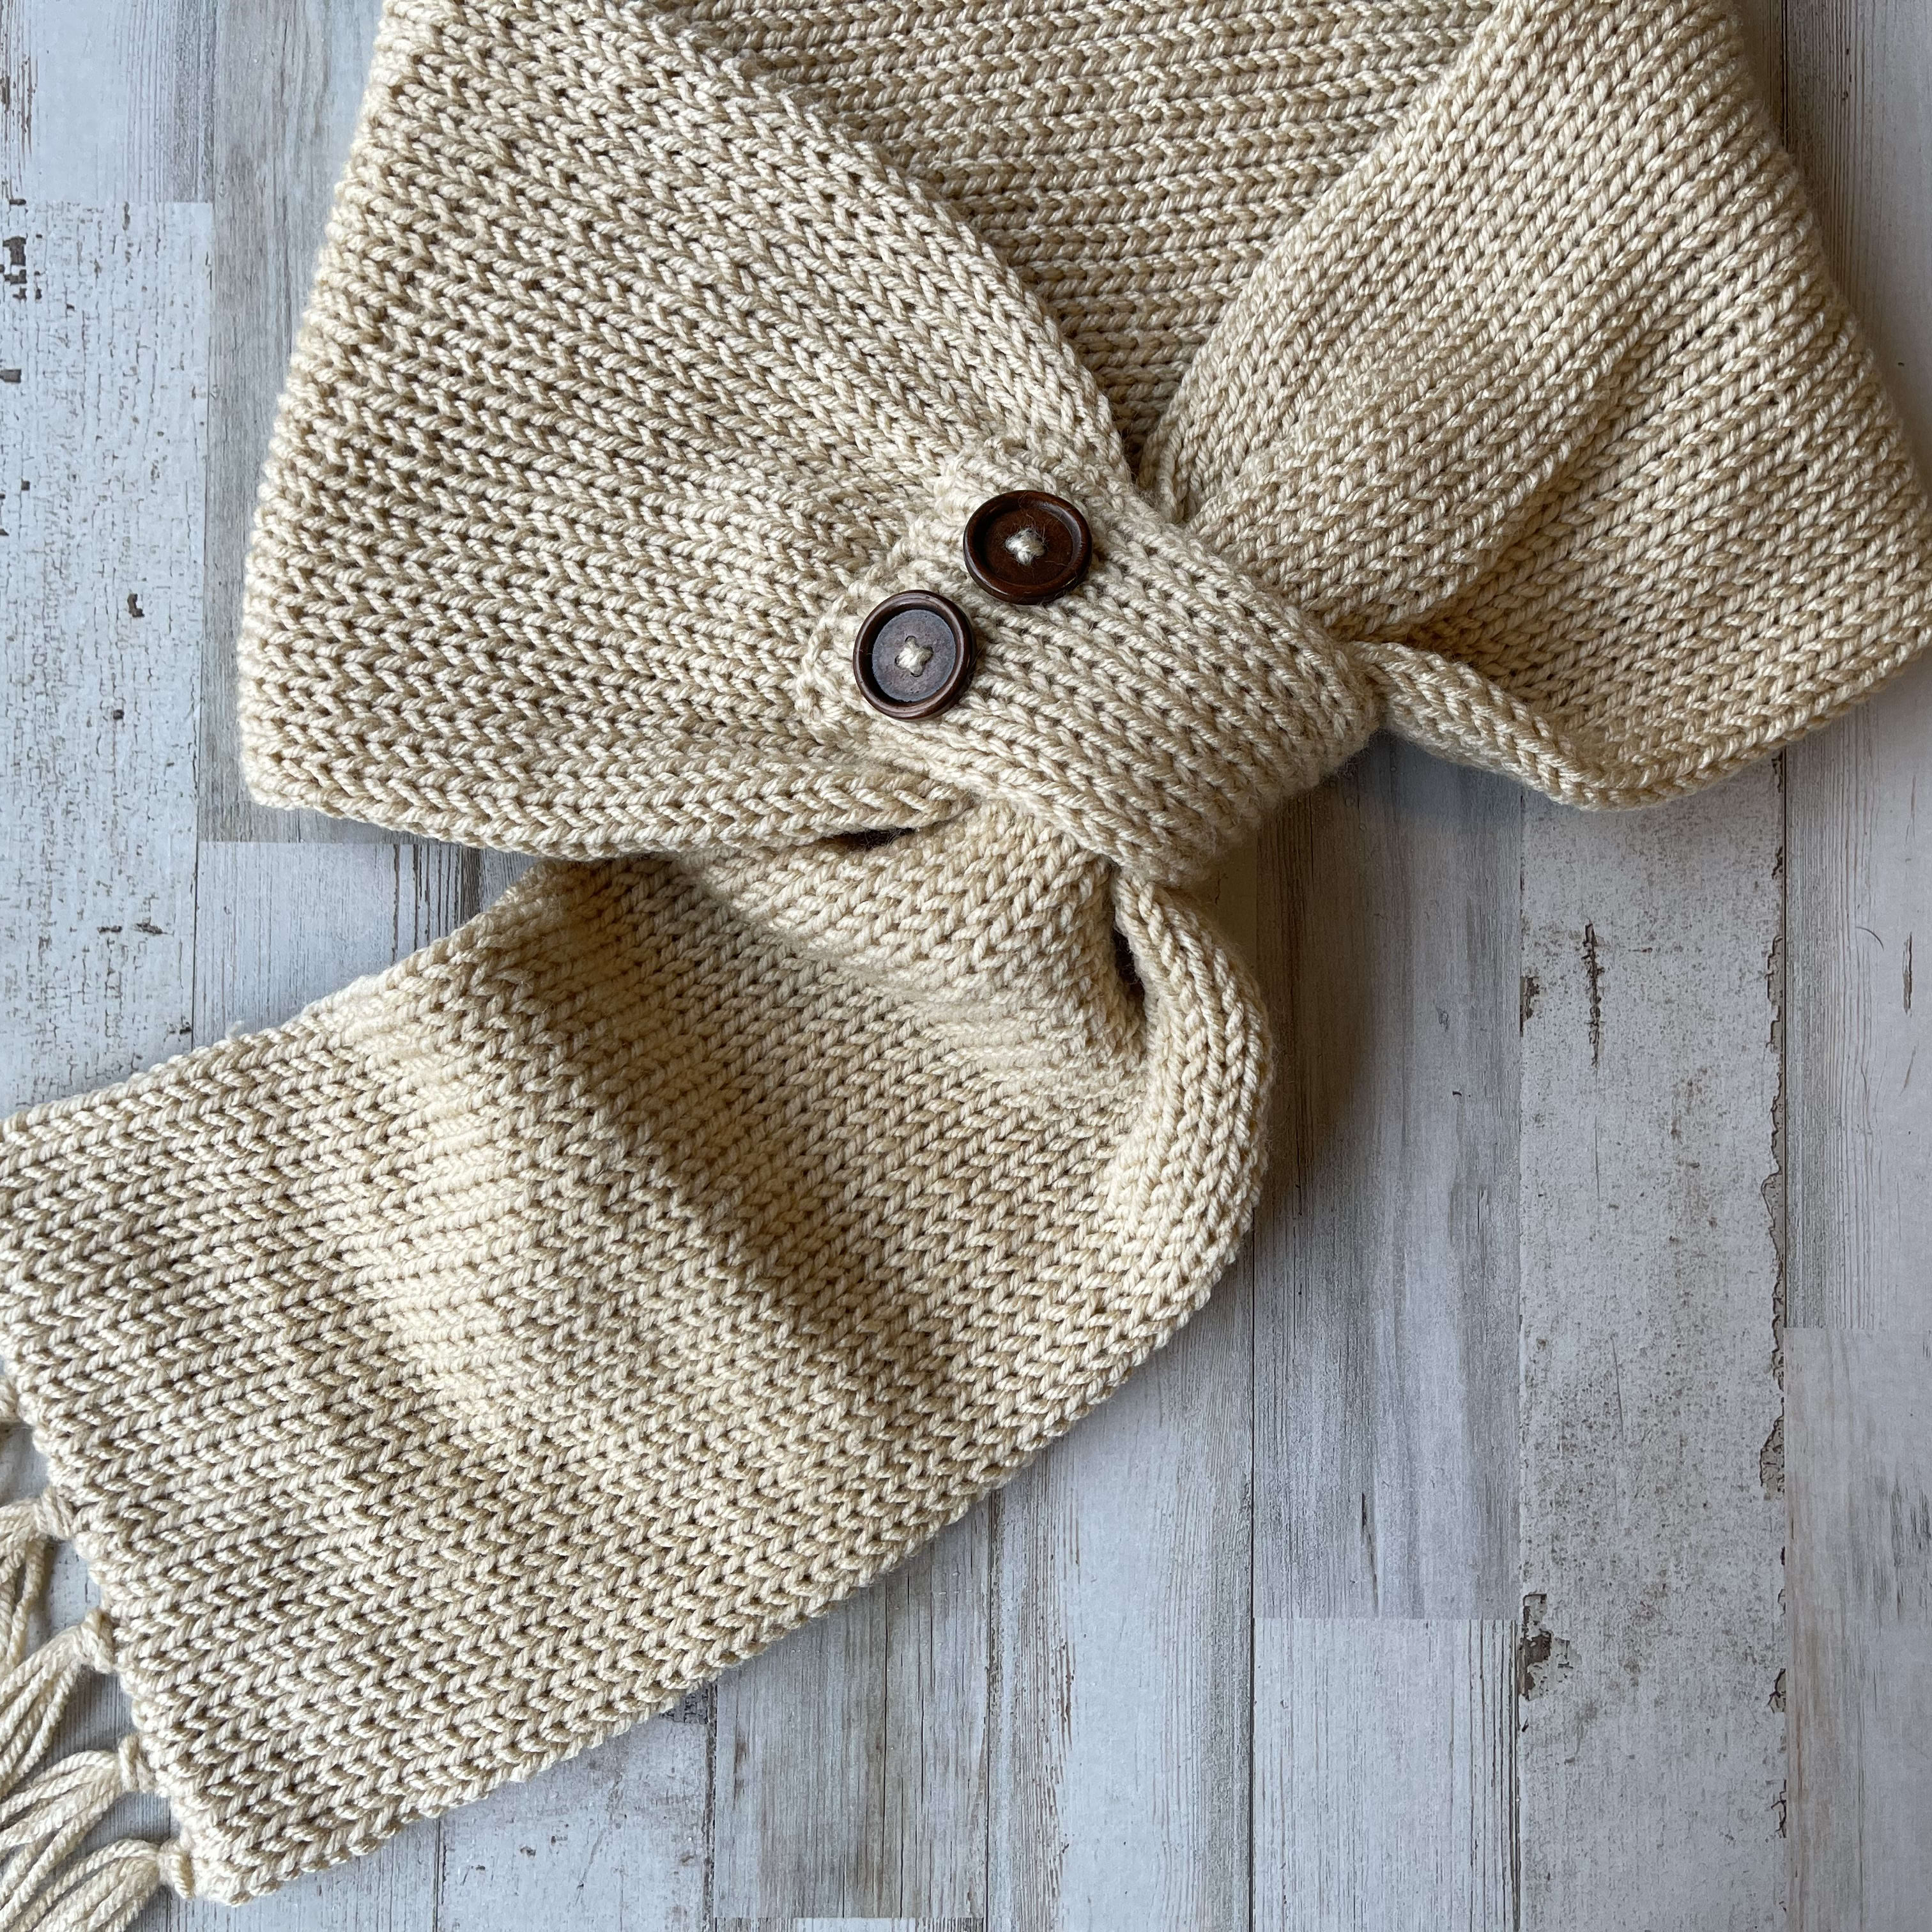 Circular Knitting Machine Button Scarf - Crochet It Creations